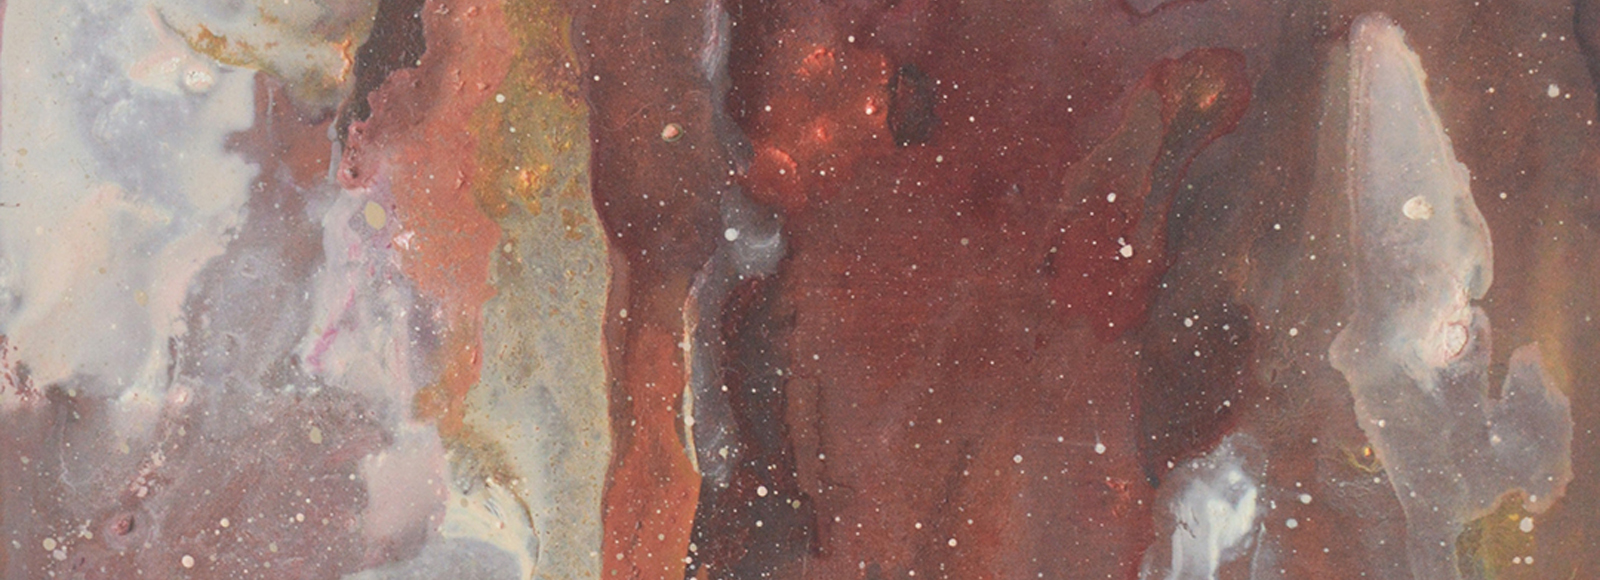 Image: Nyah Willis, ‘Skin of Gum’ 2020. Oil on copper. 20.1x47.1 cm. Image courtesy: the artist.